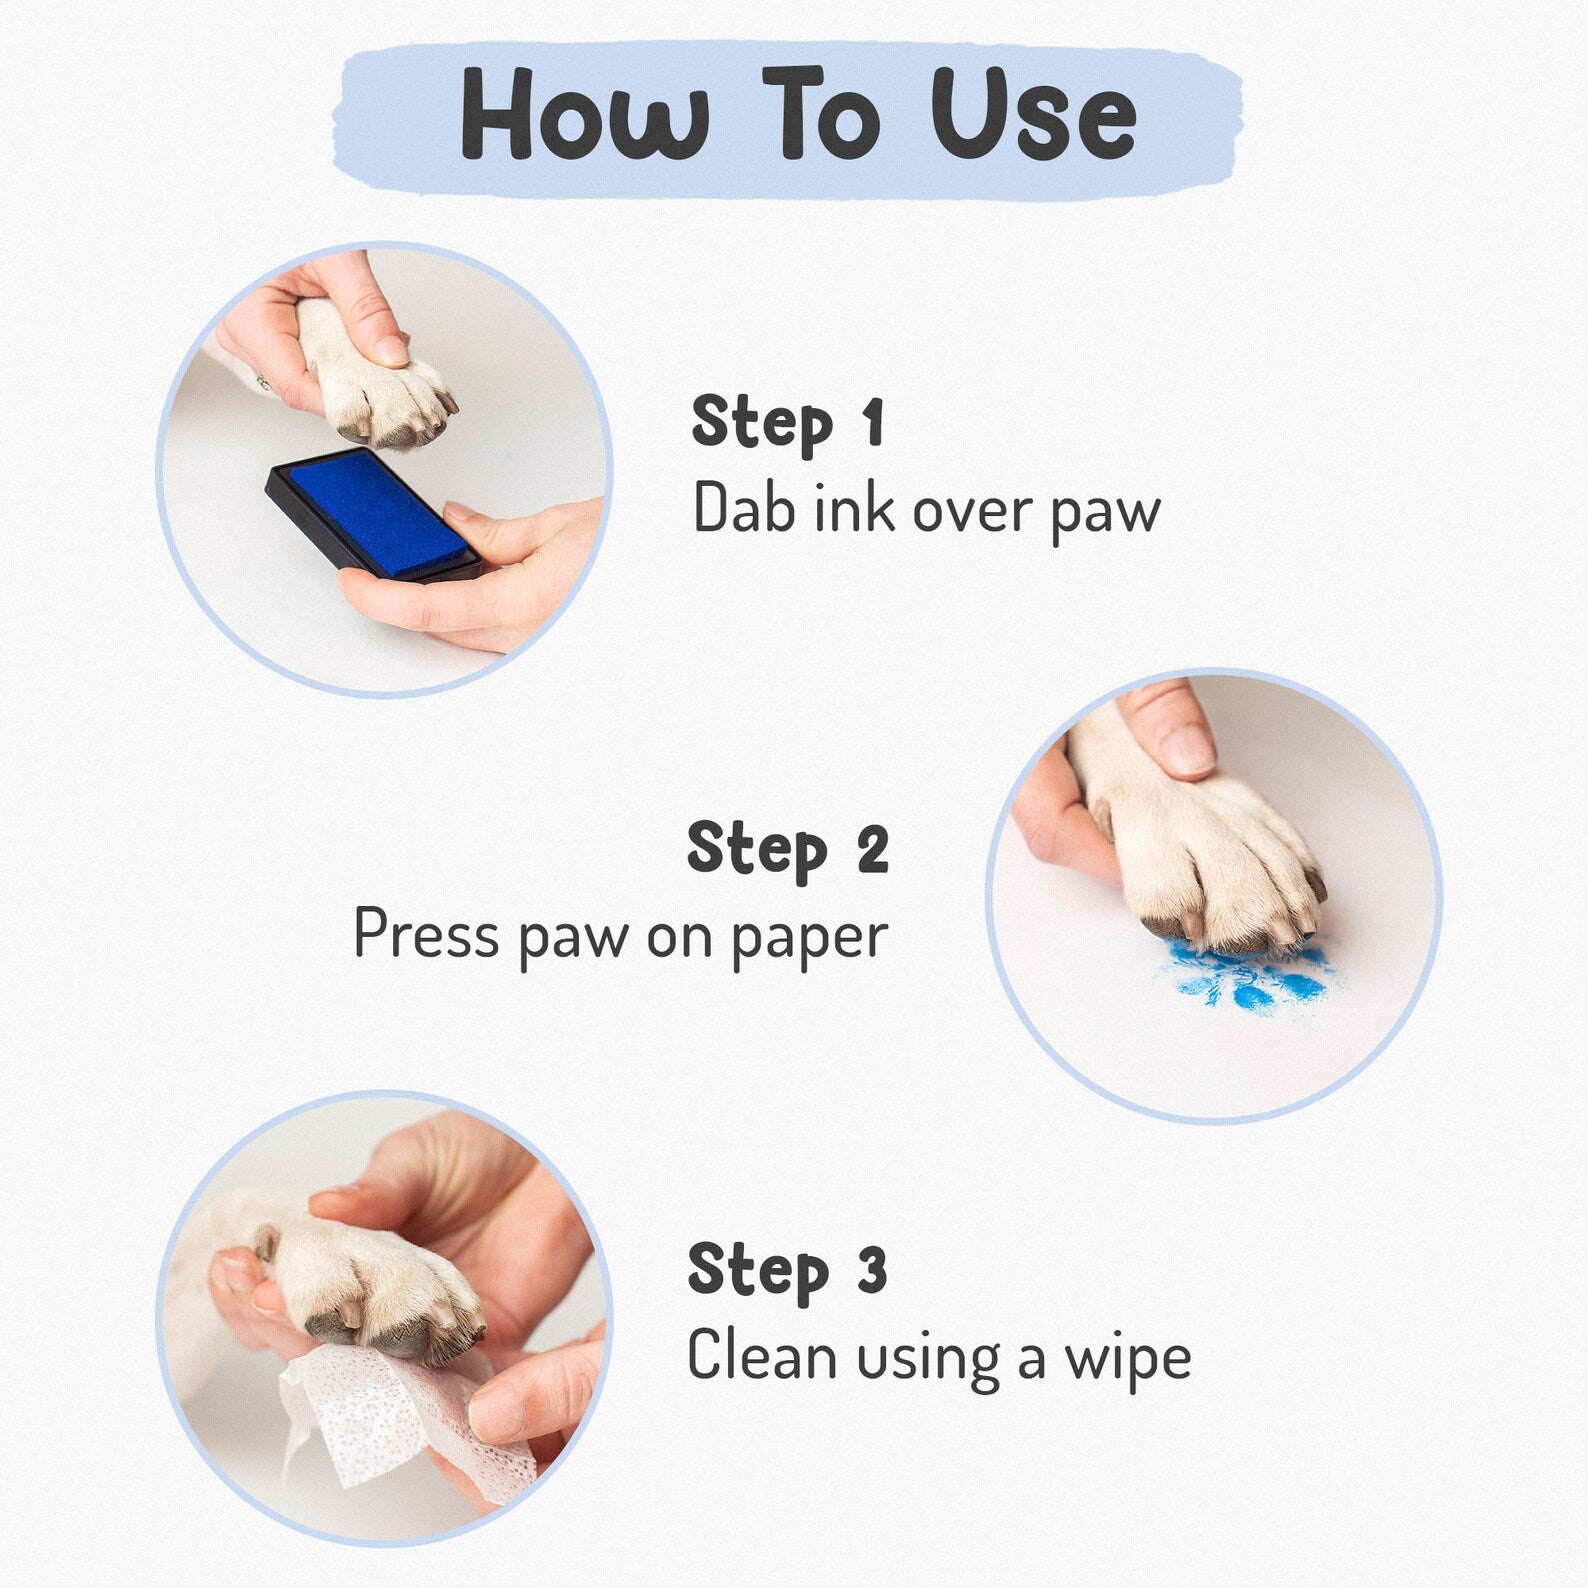 Paw69 Paw Print Stamp Pad, 100% Pet Safe, Small and Large Pets, Dog & Cat  Paw Prints, No-Mess Ink Pad, Pet Safe, Best Paw Memorial Imprint Cards, Pet